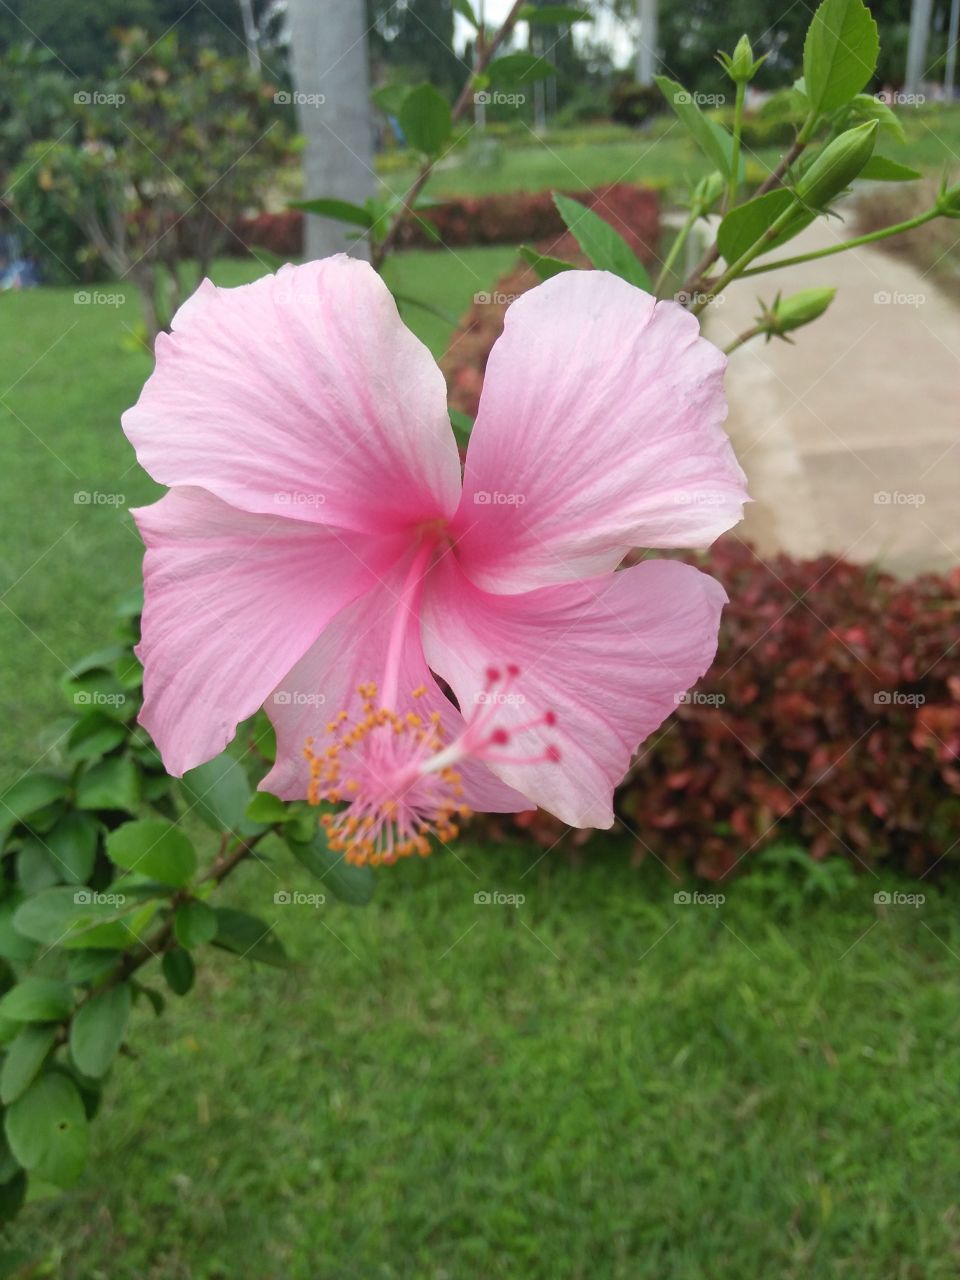 in this flower in my garden is beautiful